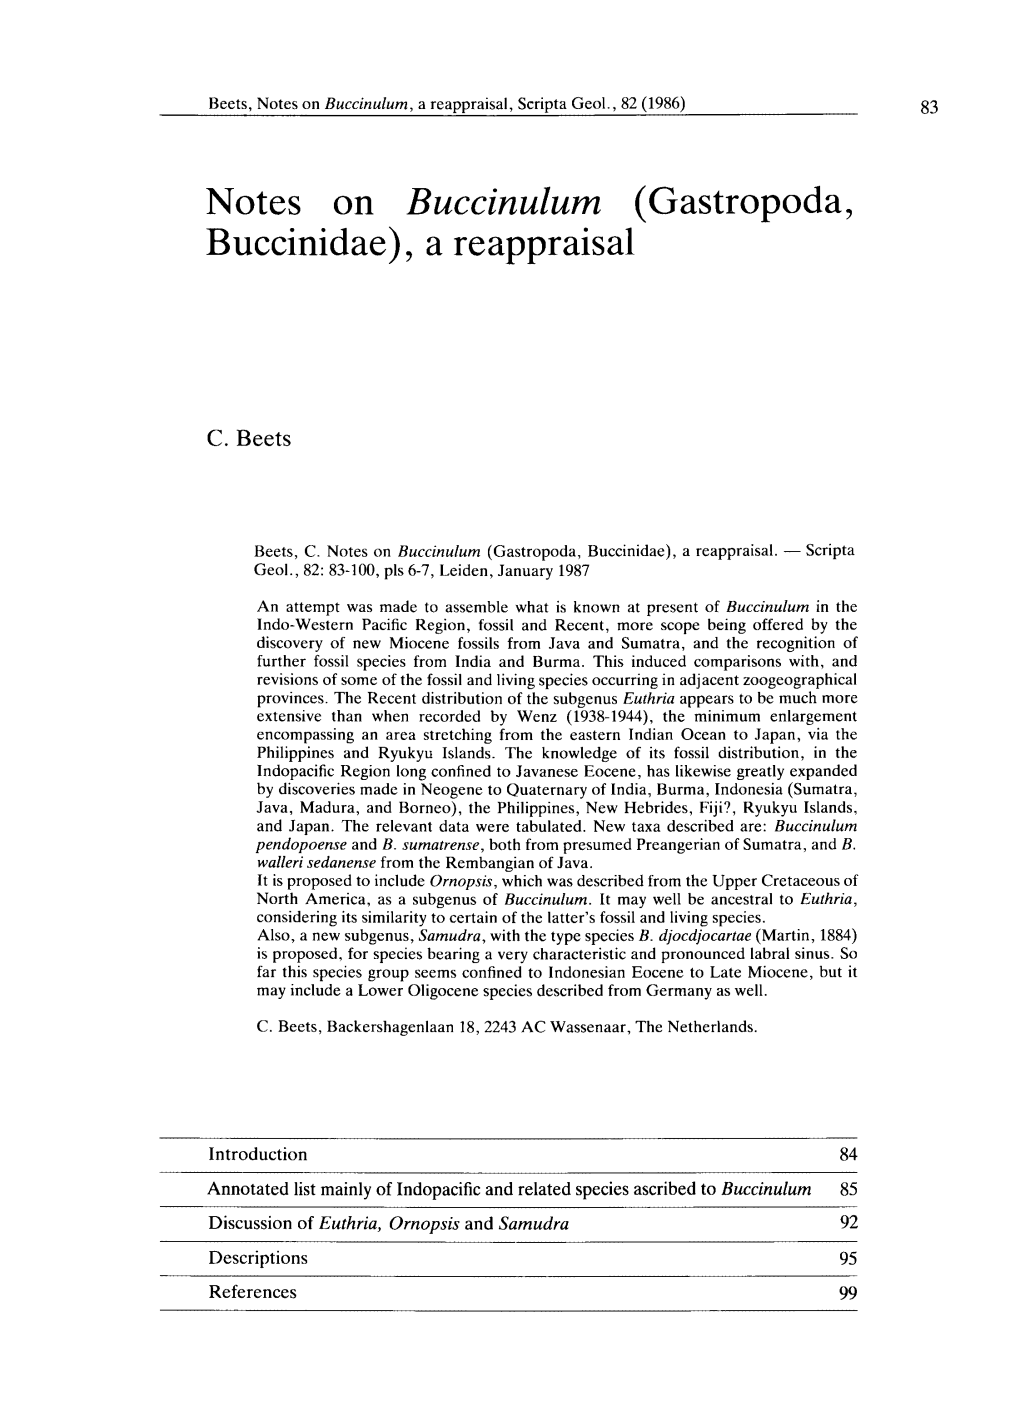 Gastropoda, Buccinidae), a Reappraisal